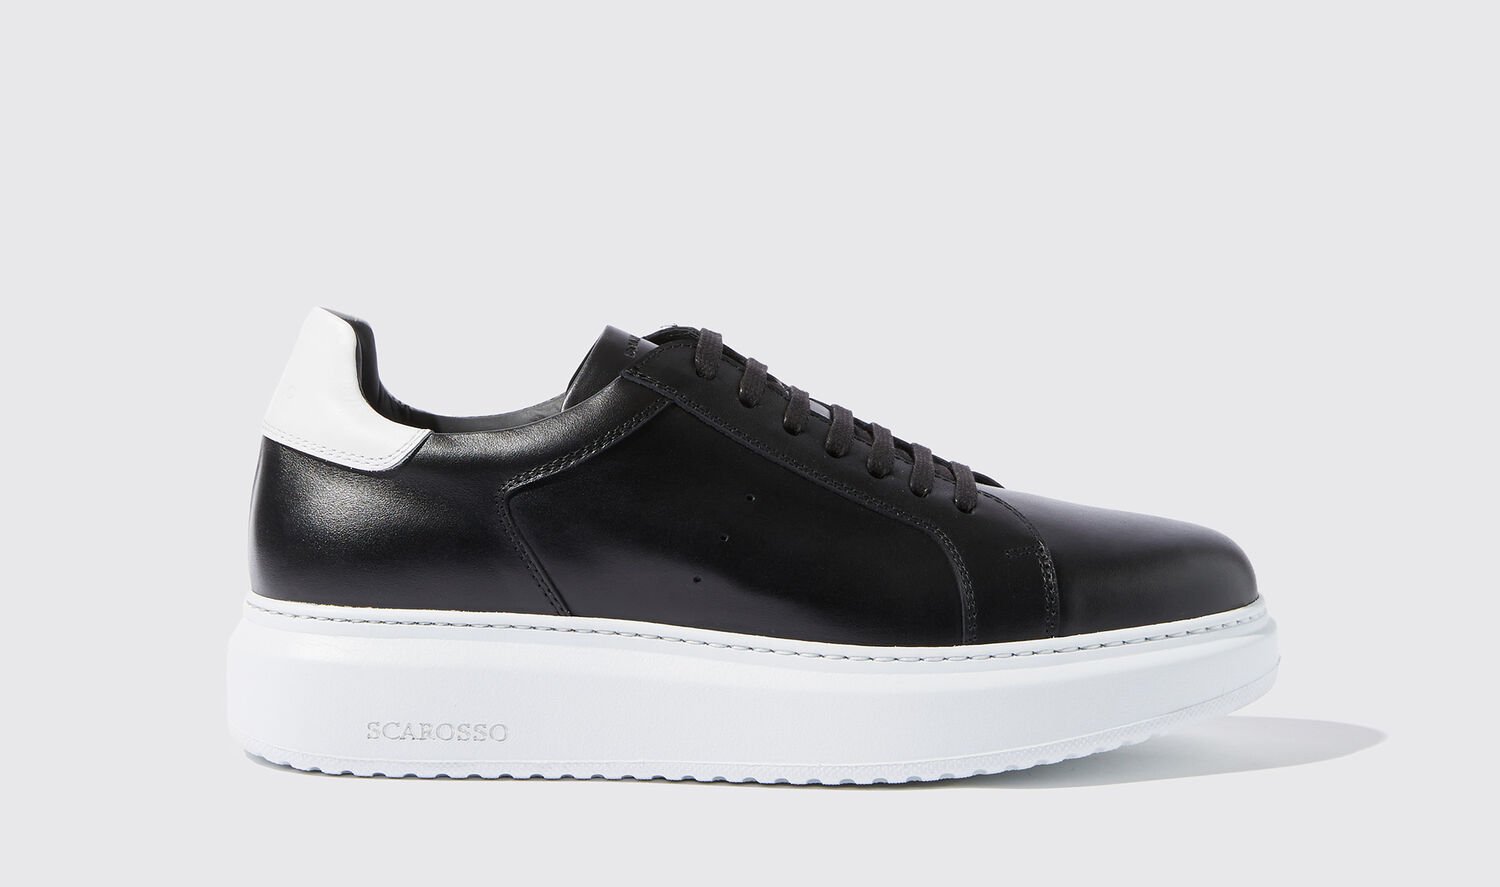 Scarosso Sneakers Dustin Black Calf Leather In Black - Calf